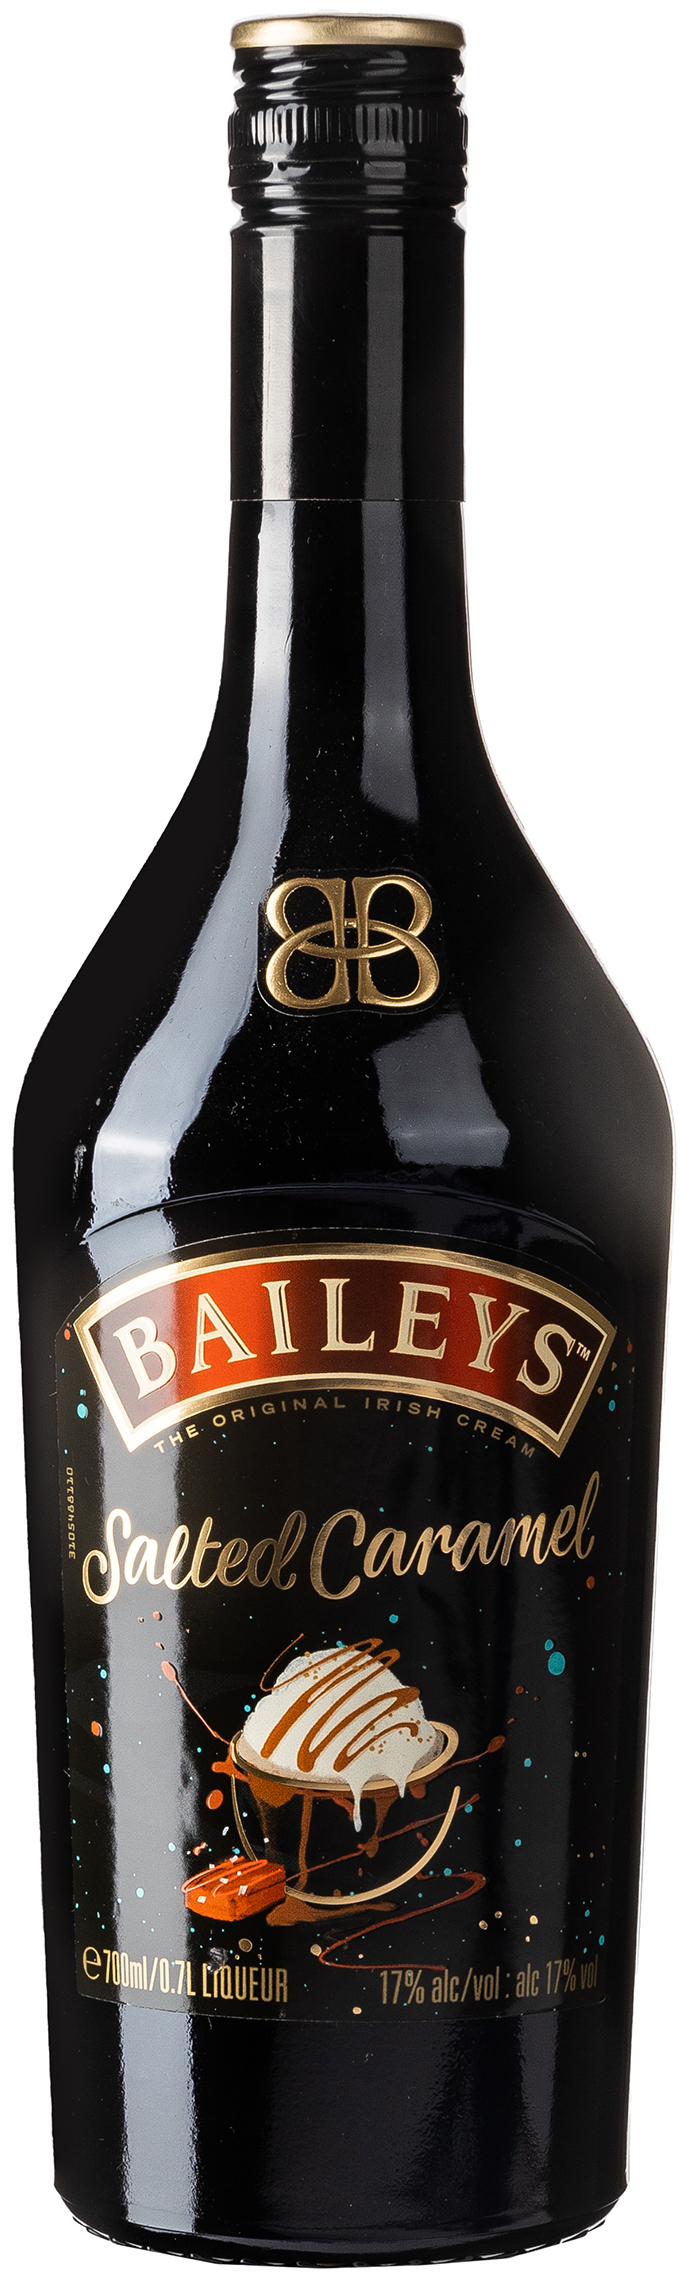 Baileys Salted Caramel Irish Cream Likör 17% vol. 0,7L